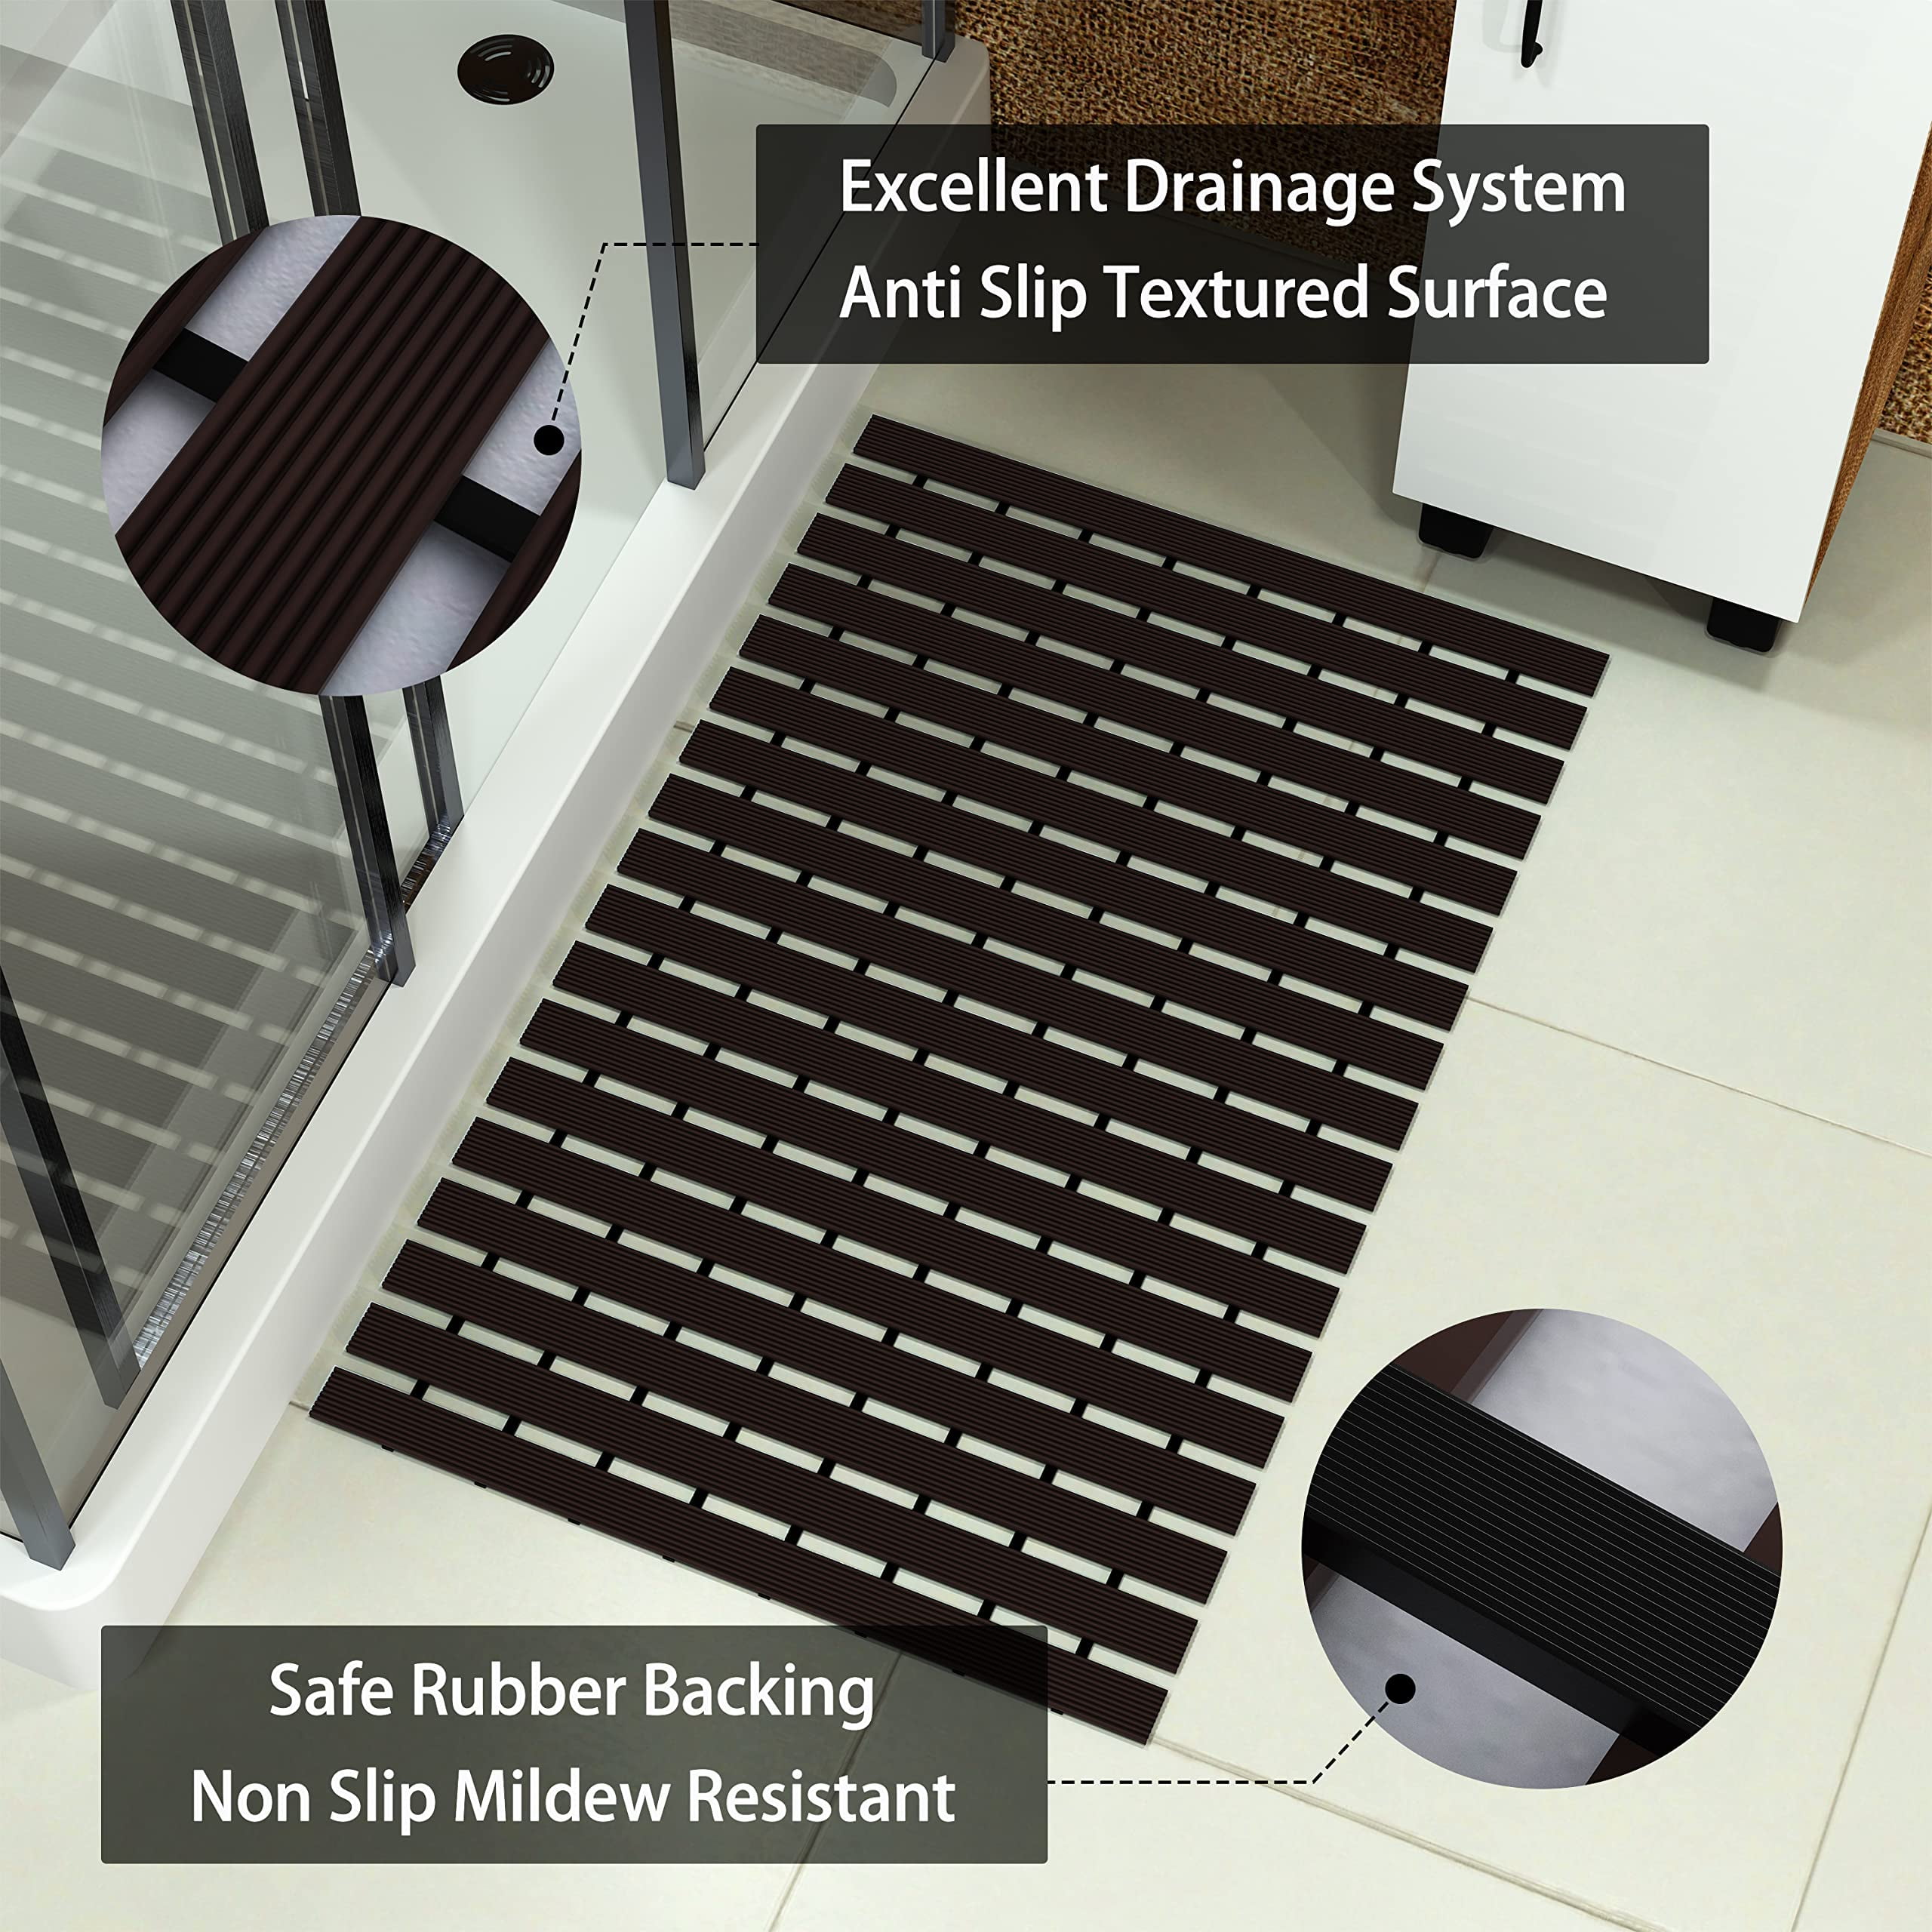 Xyyrys Secure Mat - The Ultimate Non-Slip Bath Mat,Non-Slip Bathtub Mat,The Secure Mat Bath Mat,for Tub,Shower,Bathroom (Beige,40x60cm), 055